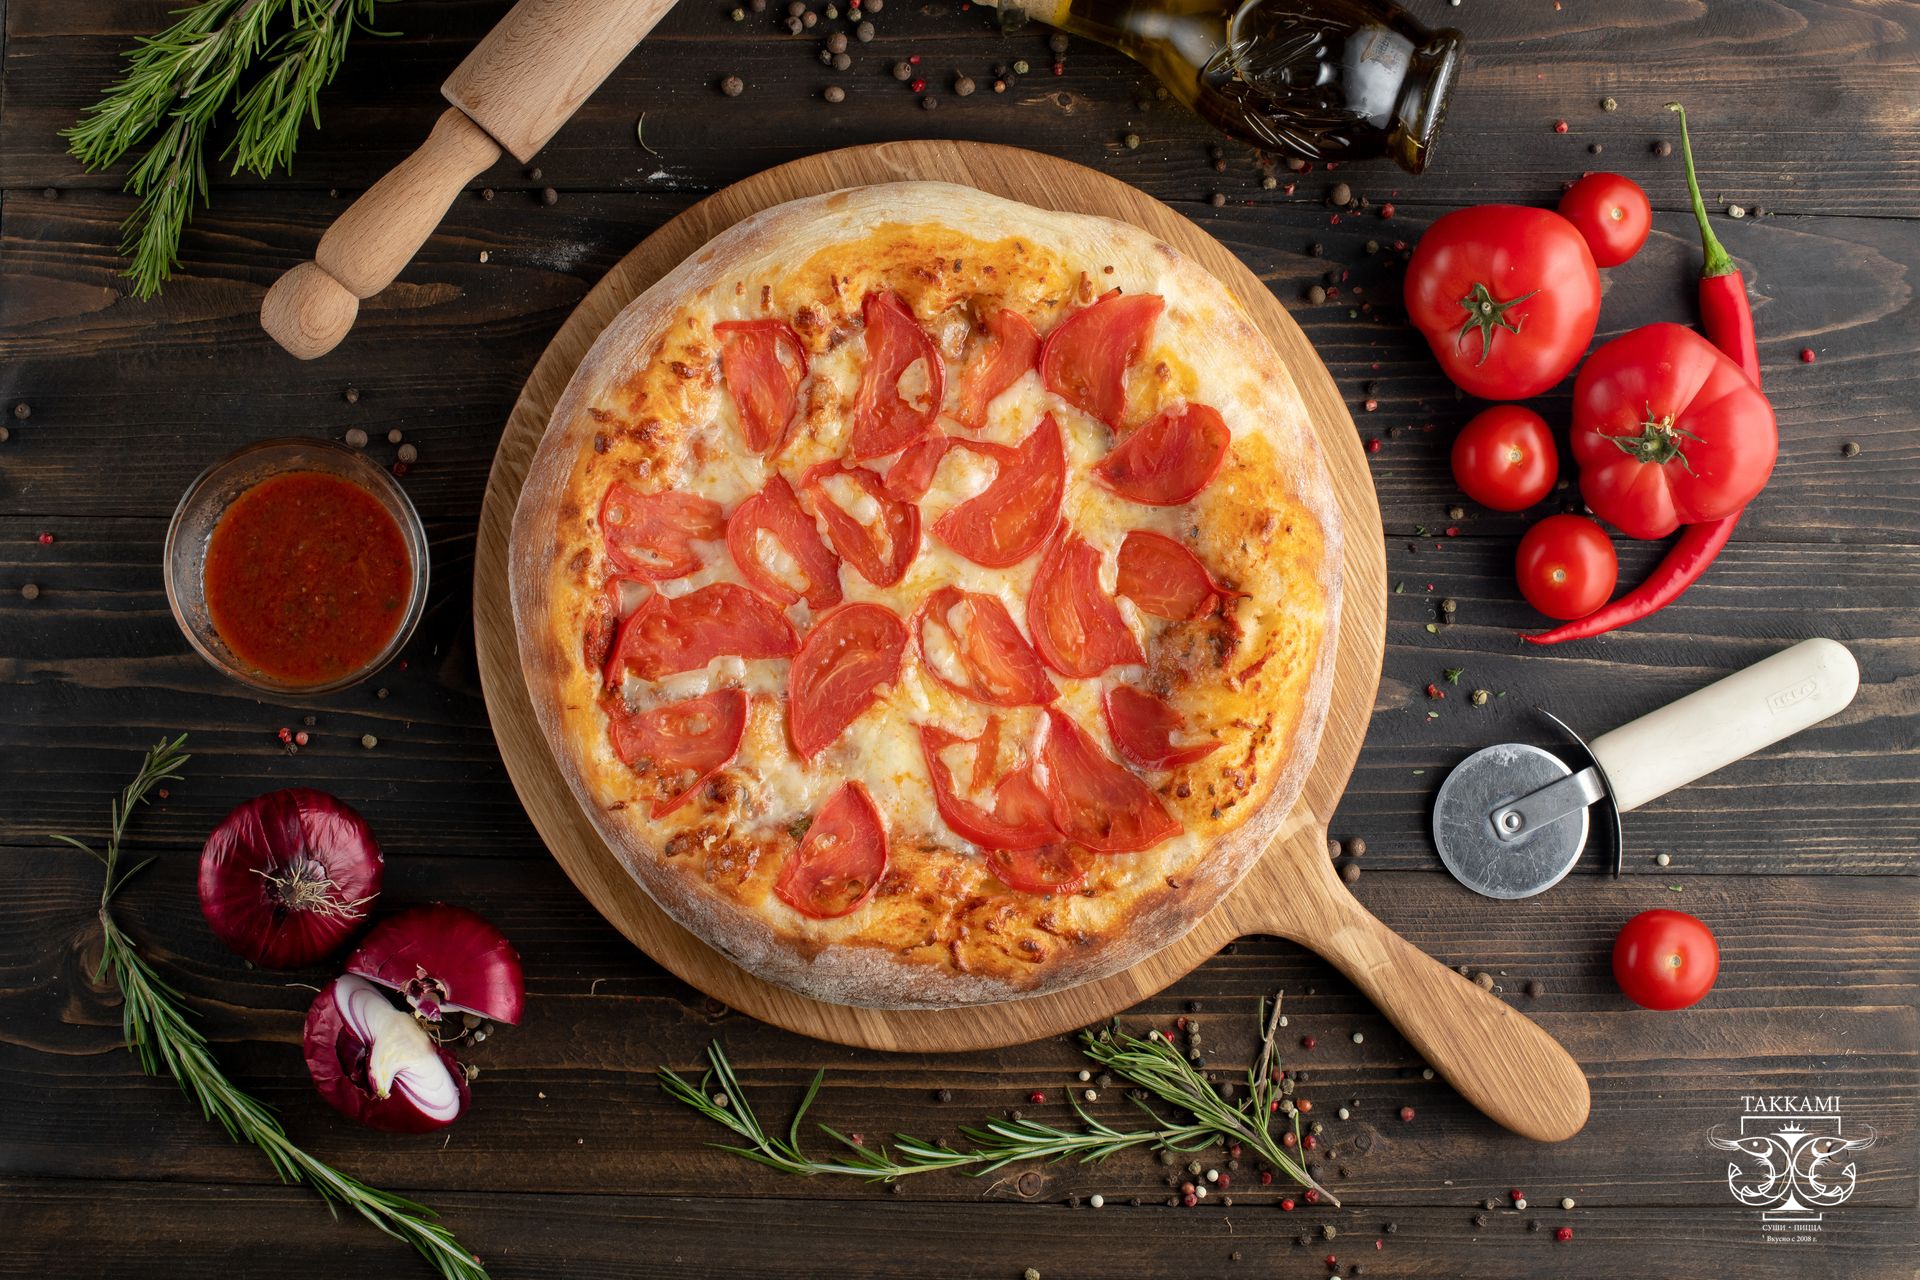 томатный соус на пиццу рецепт с фото фото 119